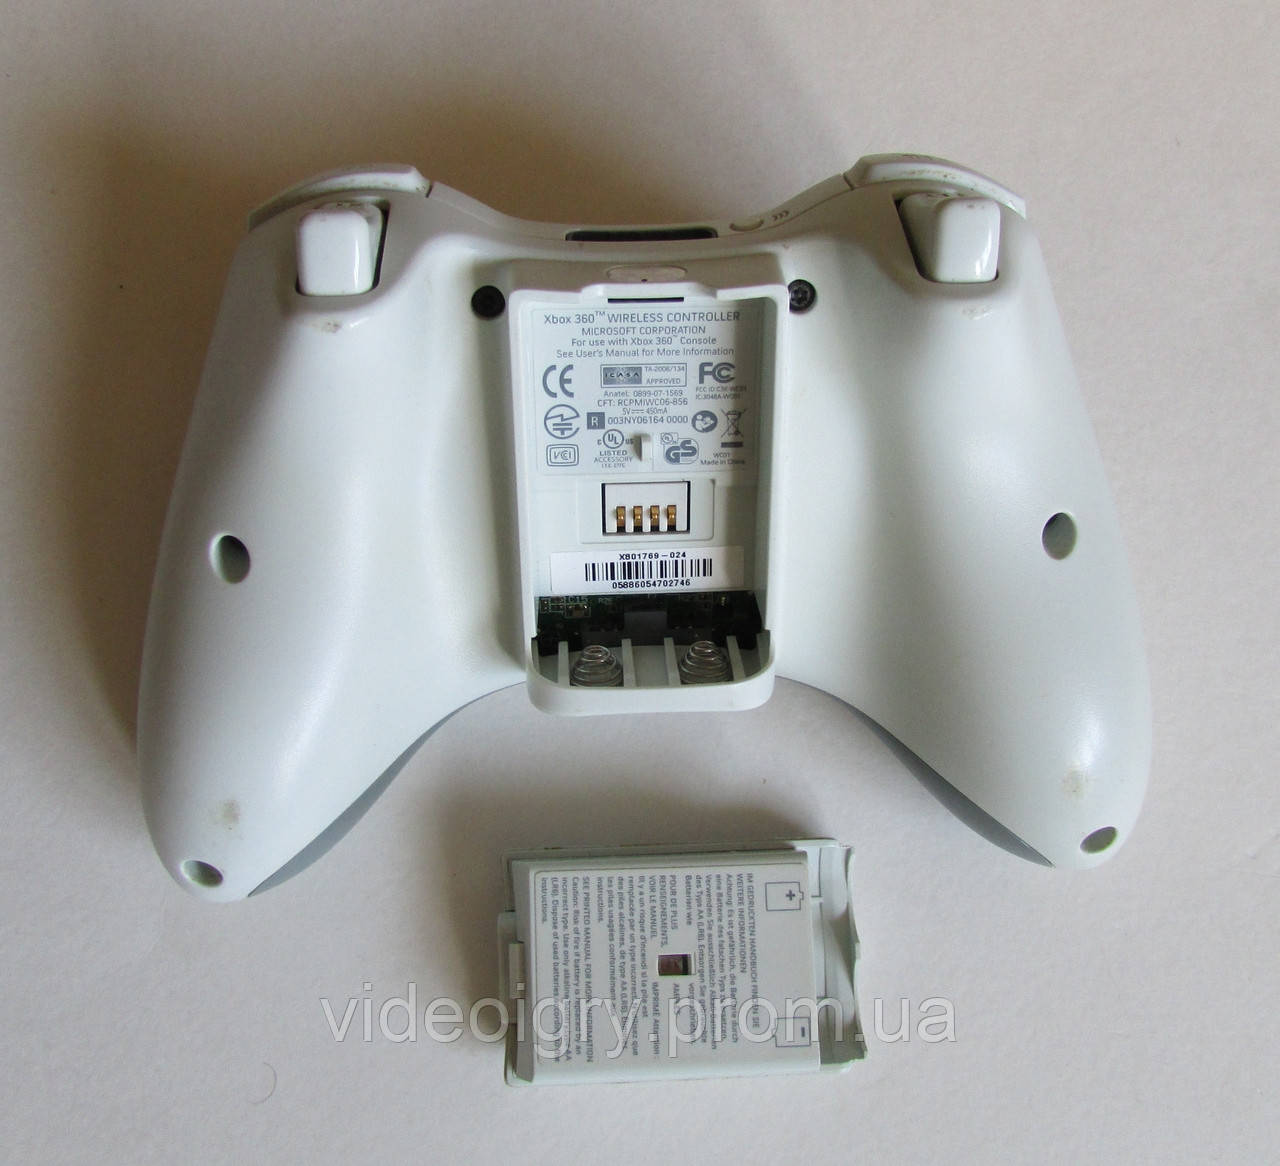 Джойстик беспроводной XBOX 360 оригинал,Wireless Controller XBox360 White  original БУ, цена 650 грн., купить в Харькове — Prom.ua (ID#62901462)